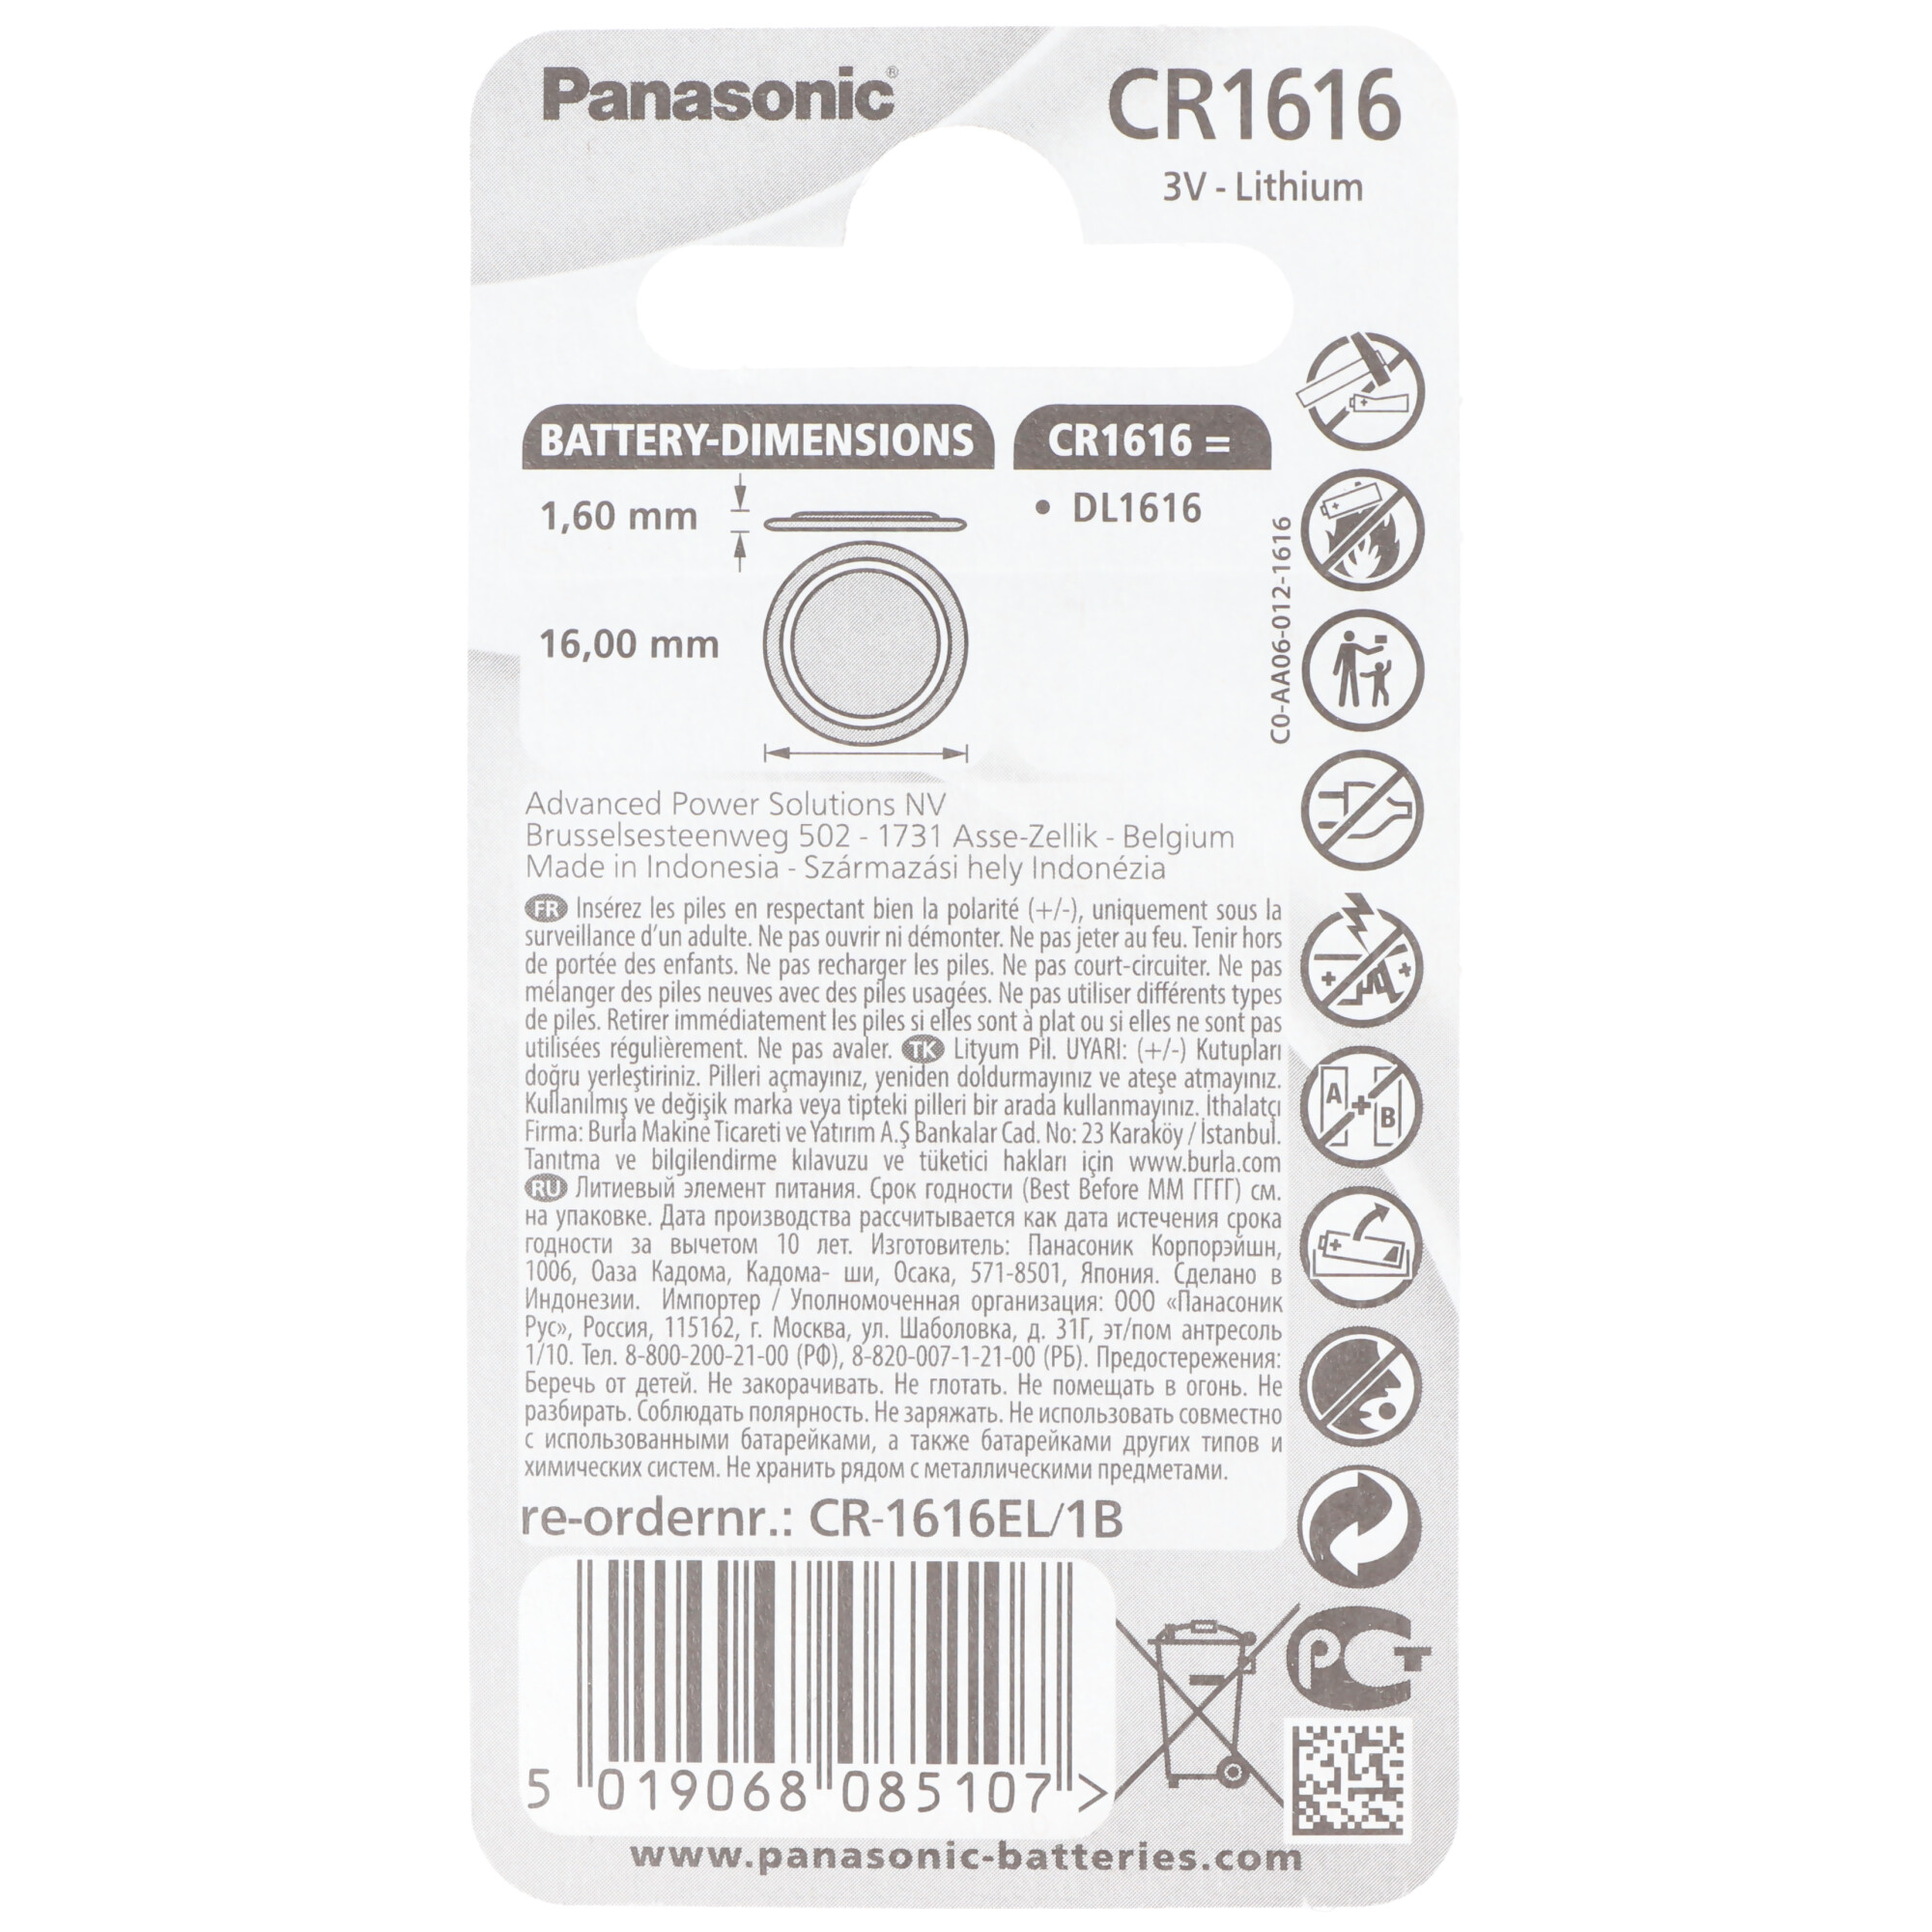 Panasonic Batterie Lithium, Knopfzelle, CR1616, 3V Electronics, Lithium Power, Retail Blister (1-Pack)